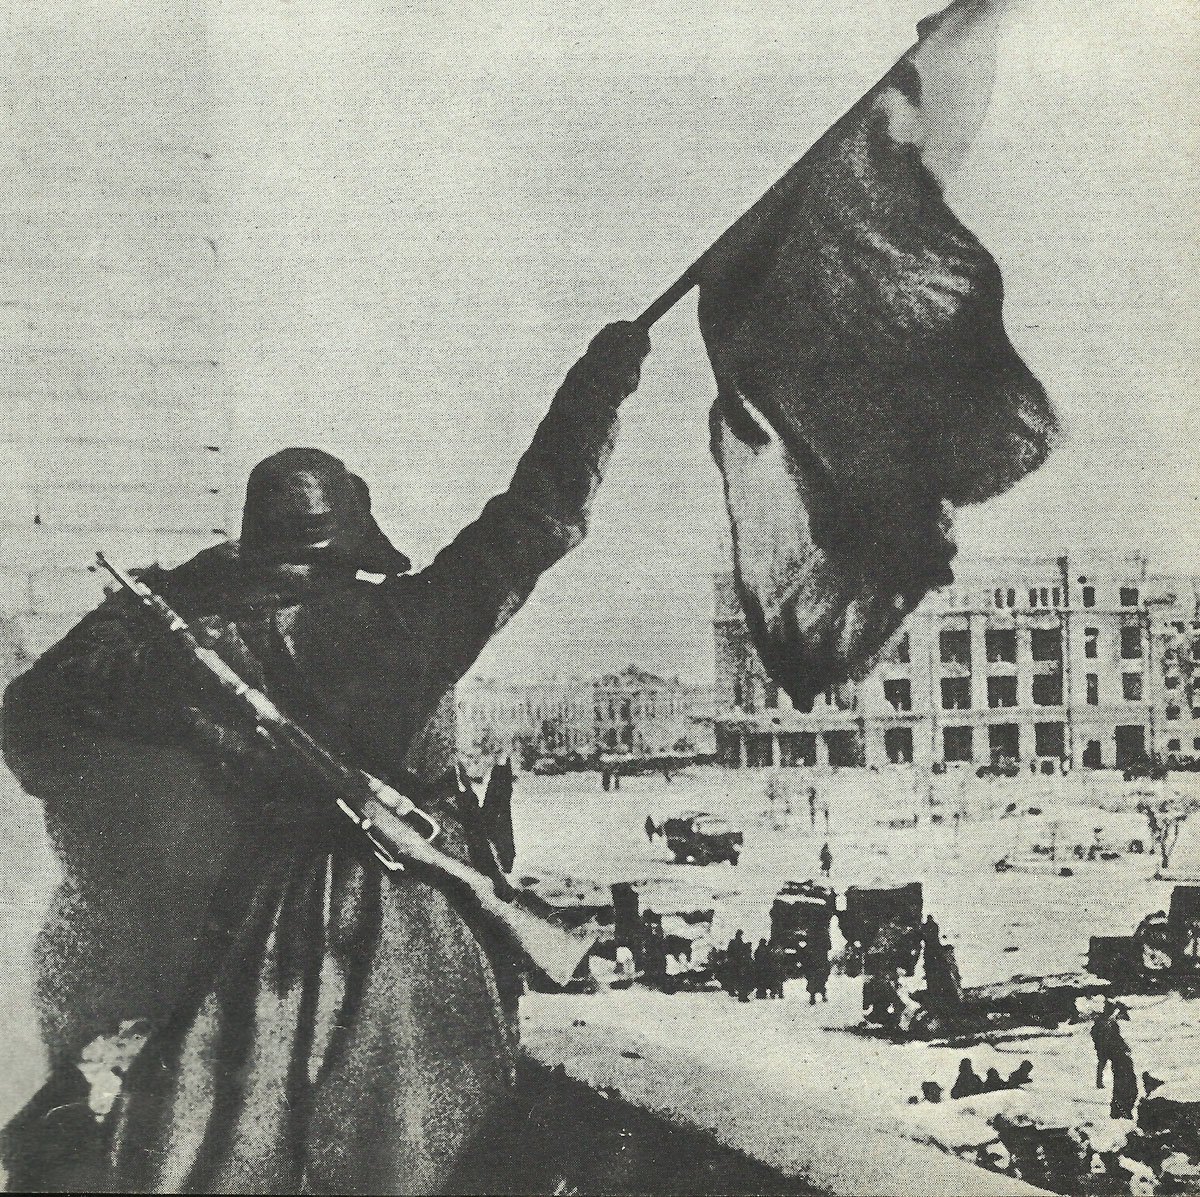 Kapitulation Stalingrad